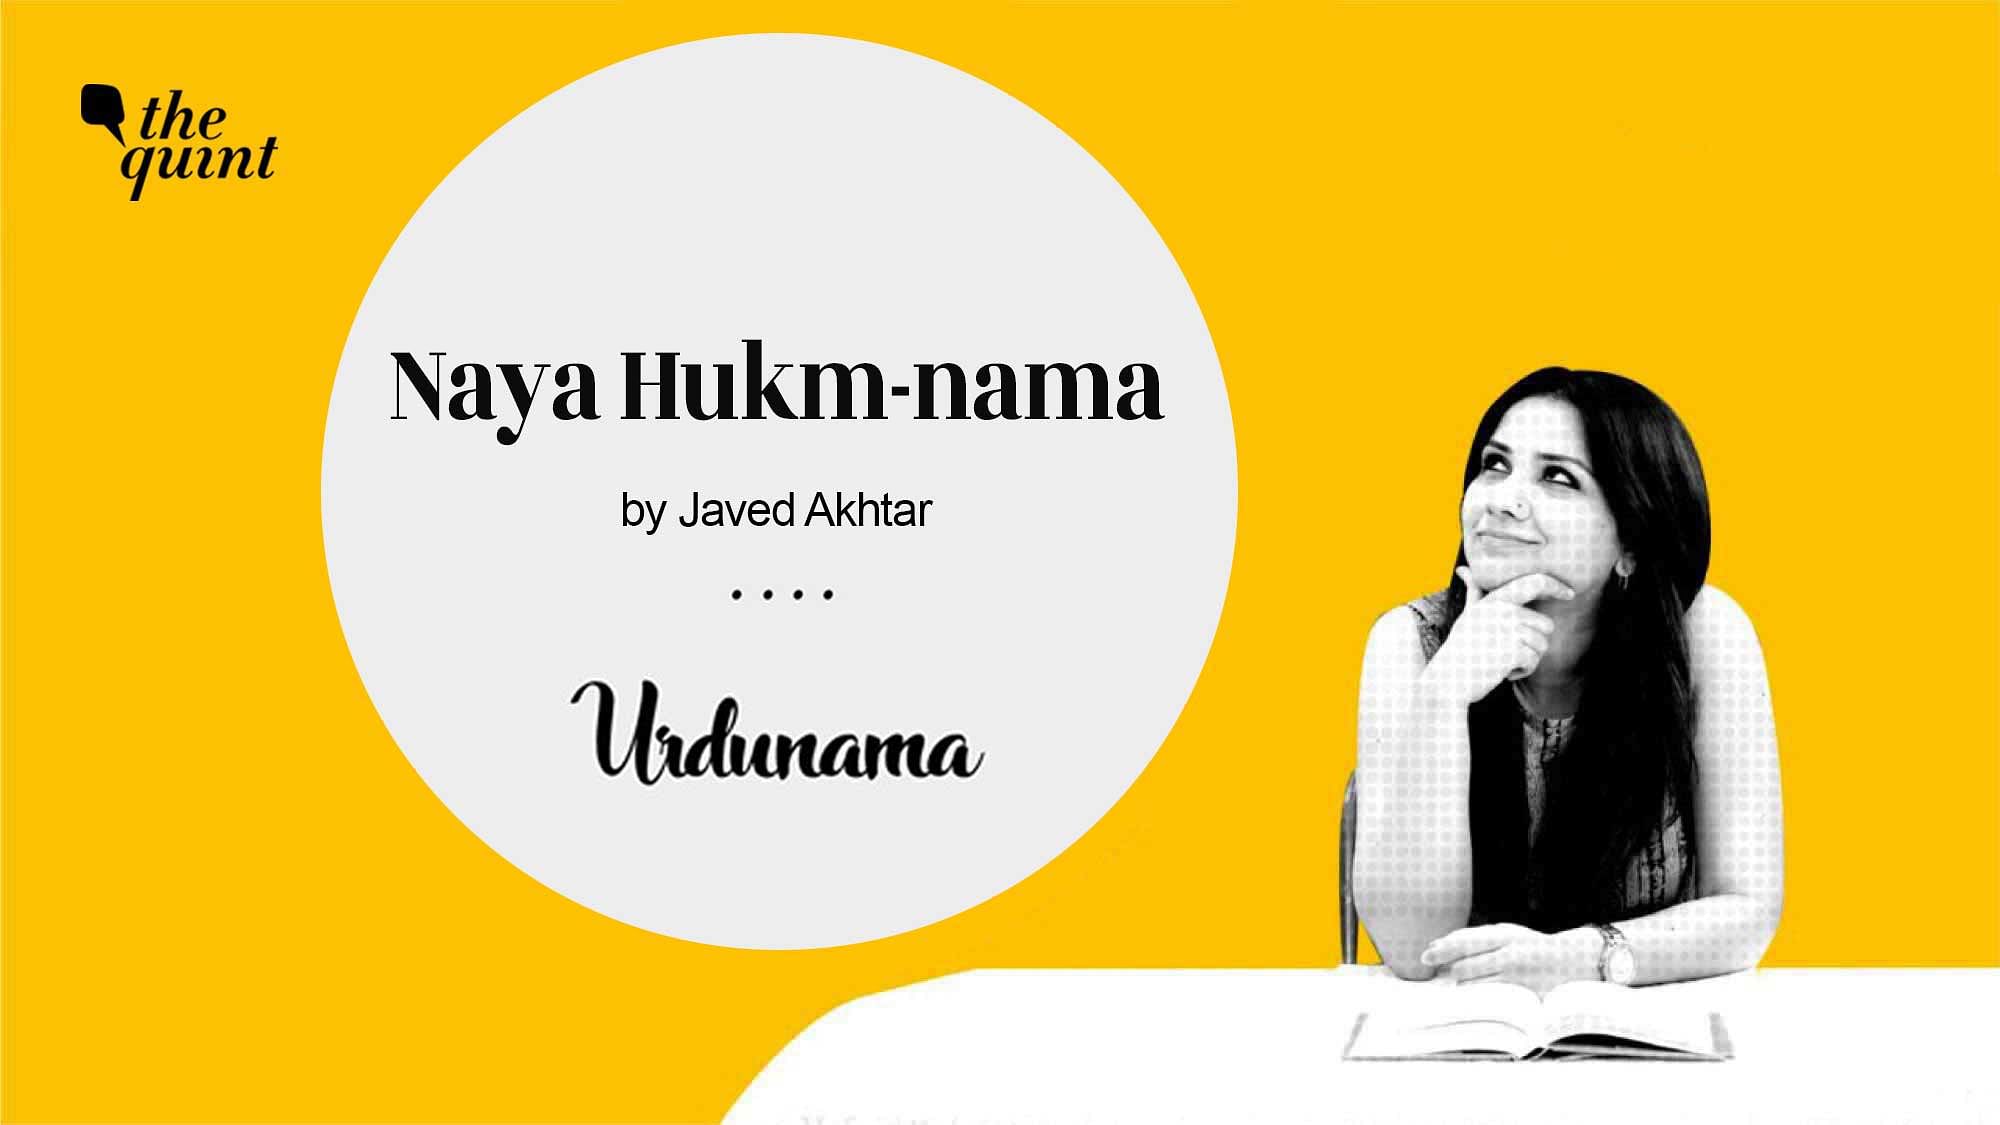 Urdunama: Watch The Quint’s Fabeha Syed recite Javed Akhtar’s ‘Naya hukm-nama’, or ‘The New Ordinance’.&nbsp;